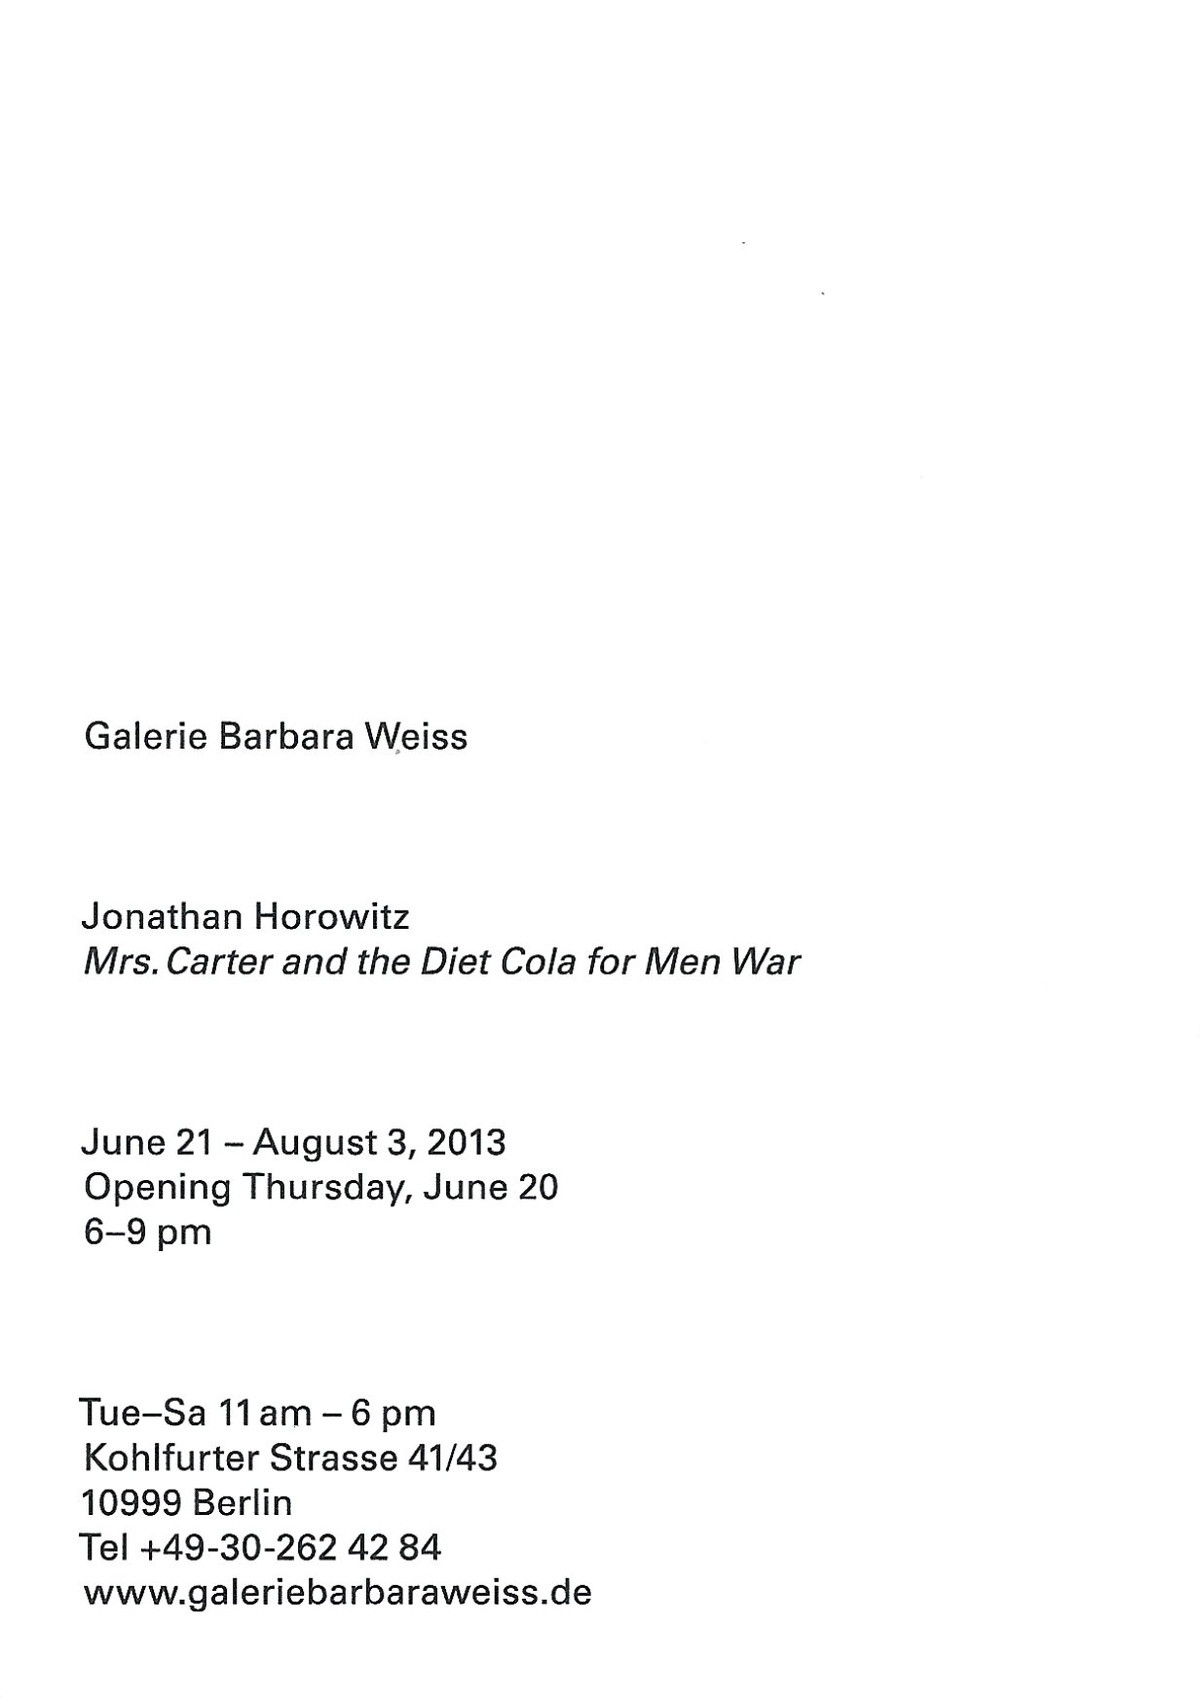 Jonathan Horowitz: Mrs. Carter and the Diet Cola for Men War. June 21 – August 3, 2013